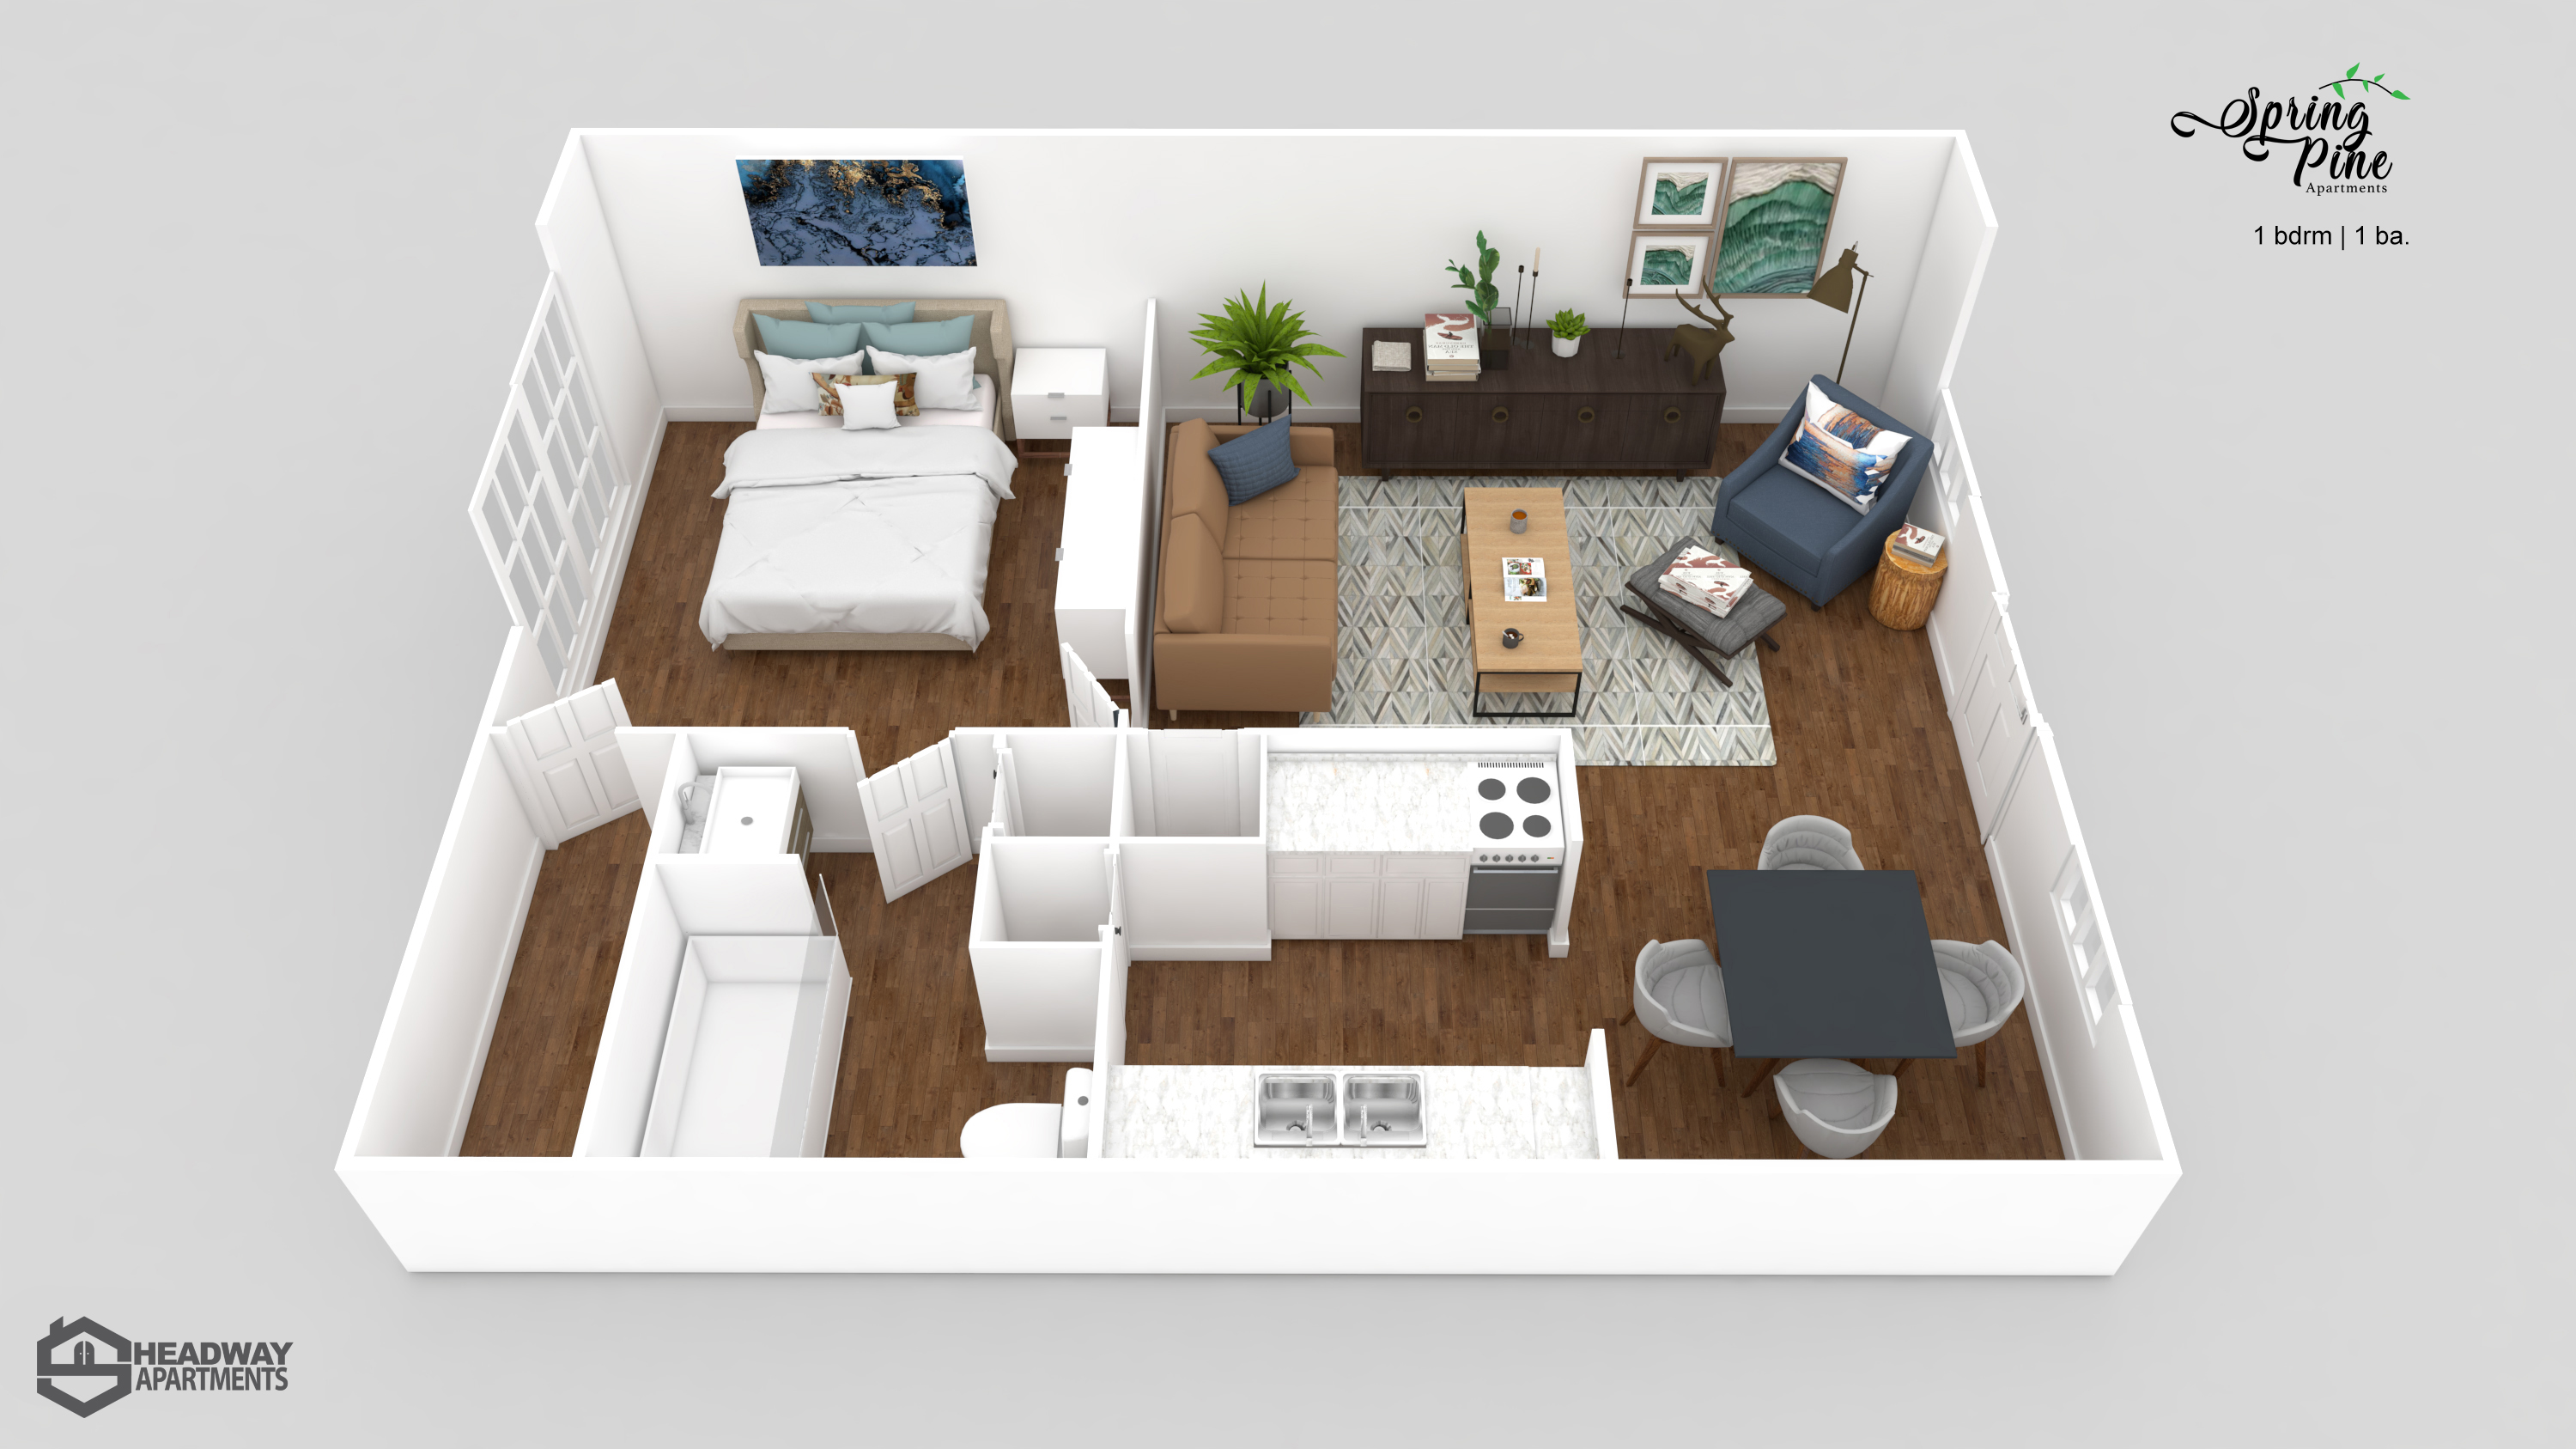 1 bedroom 1 bath-Spring Pine Apartments_Houston_Headway Apartments.jpg